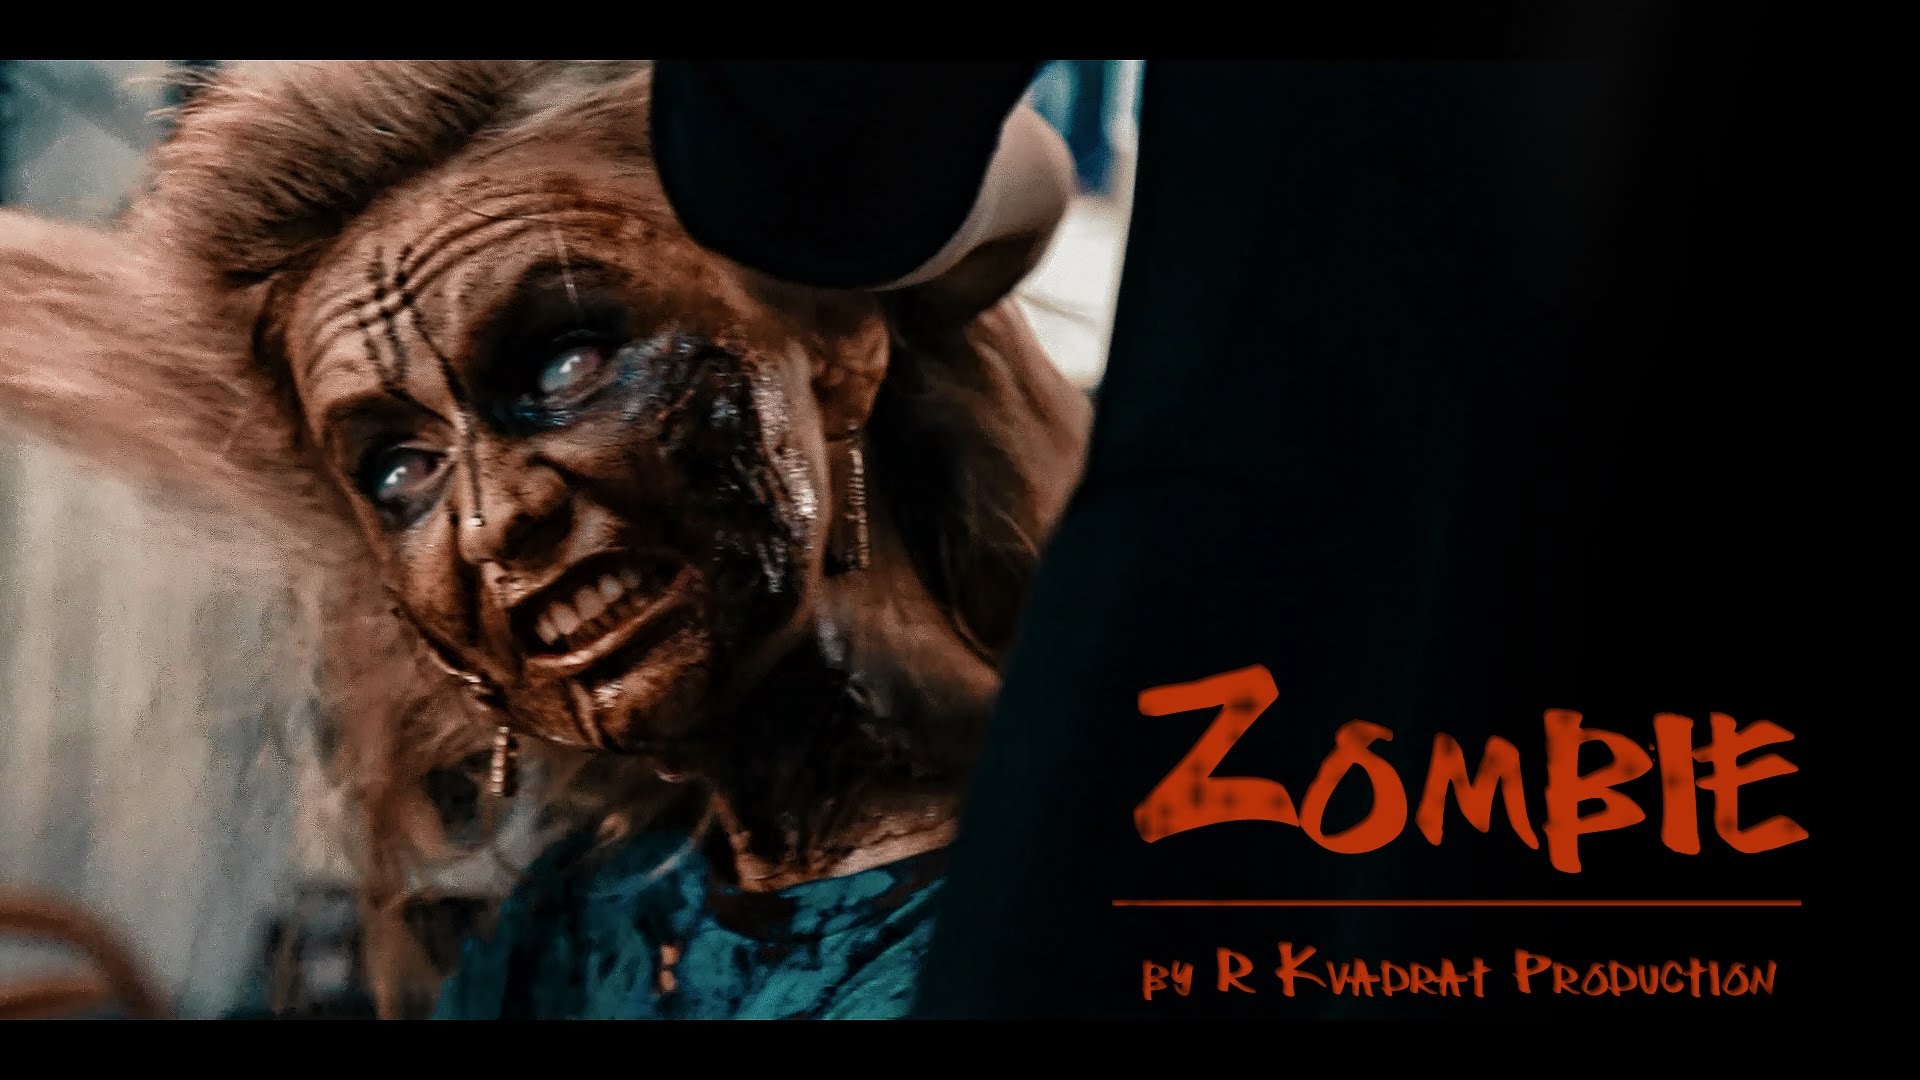 Реклама косметики с участием зомби